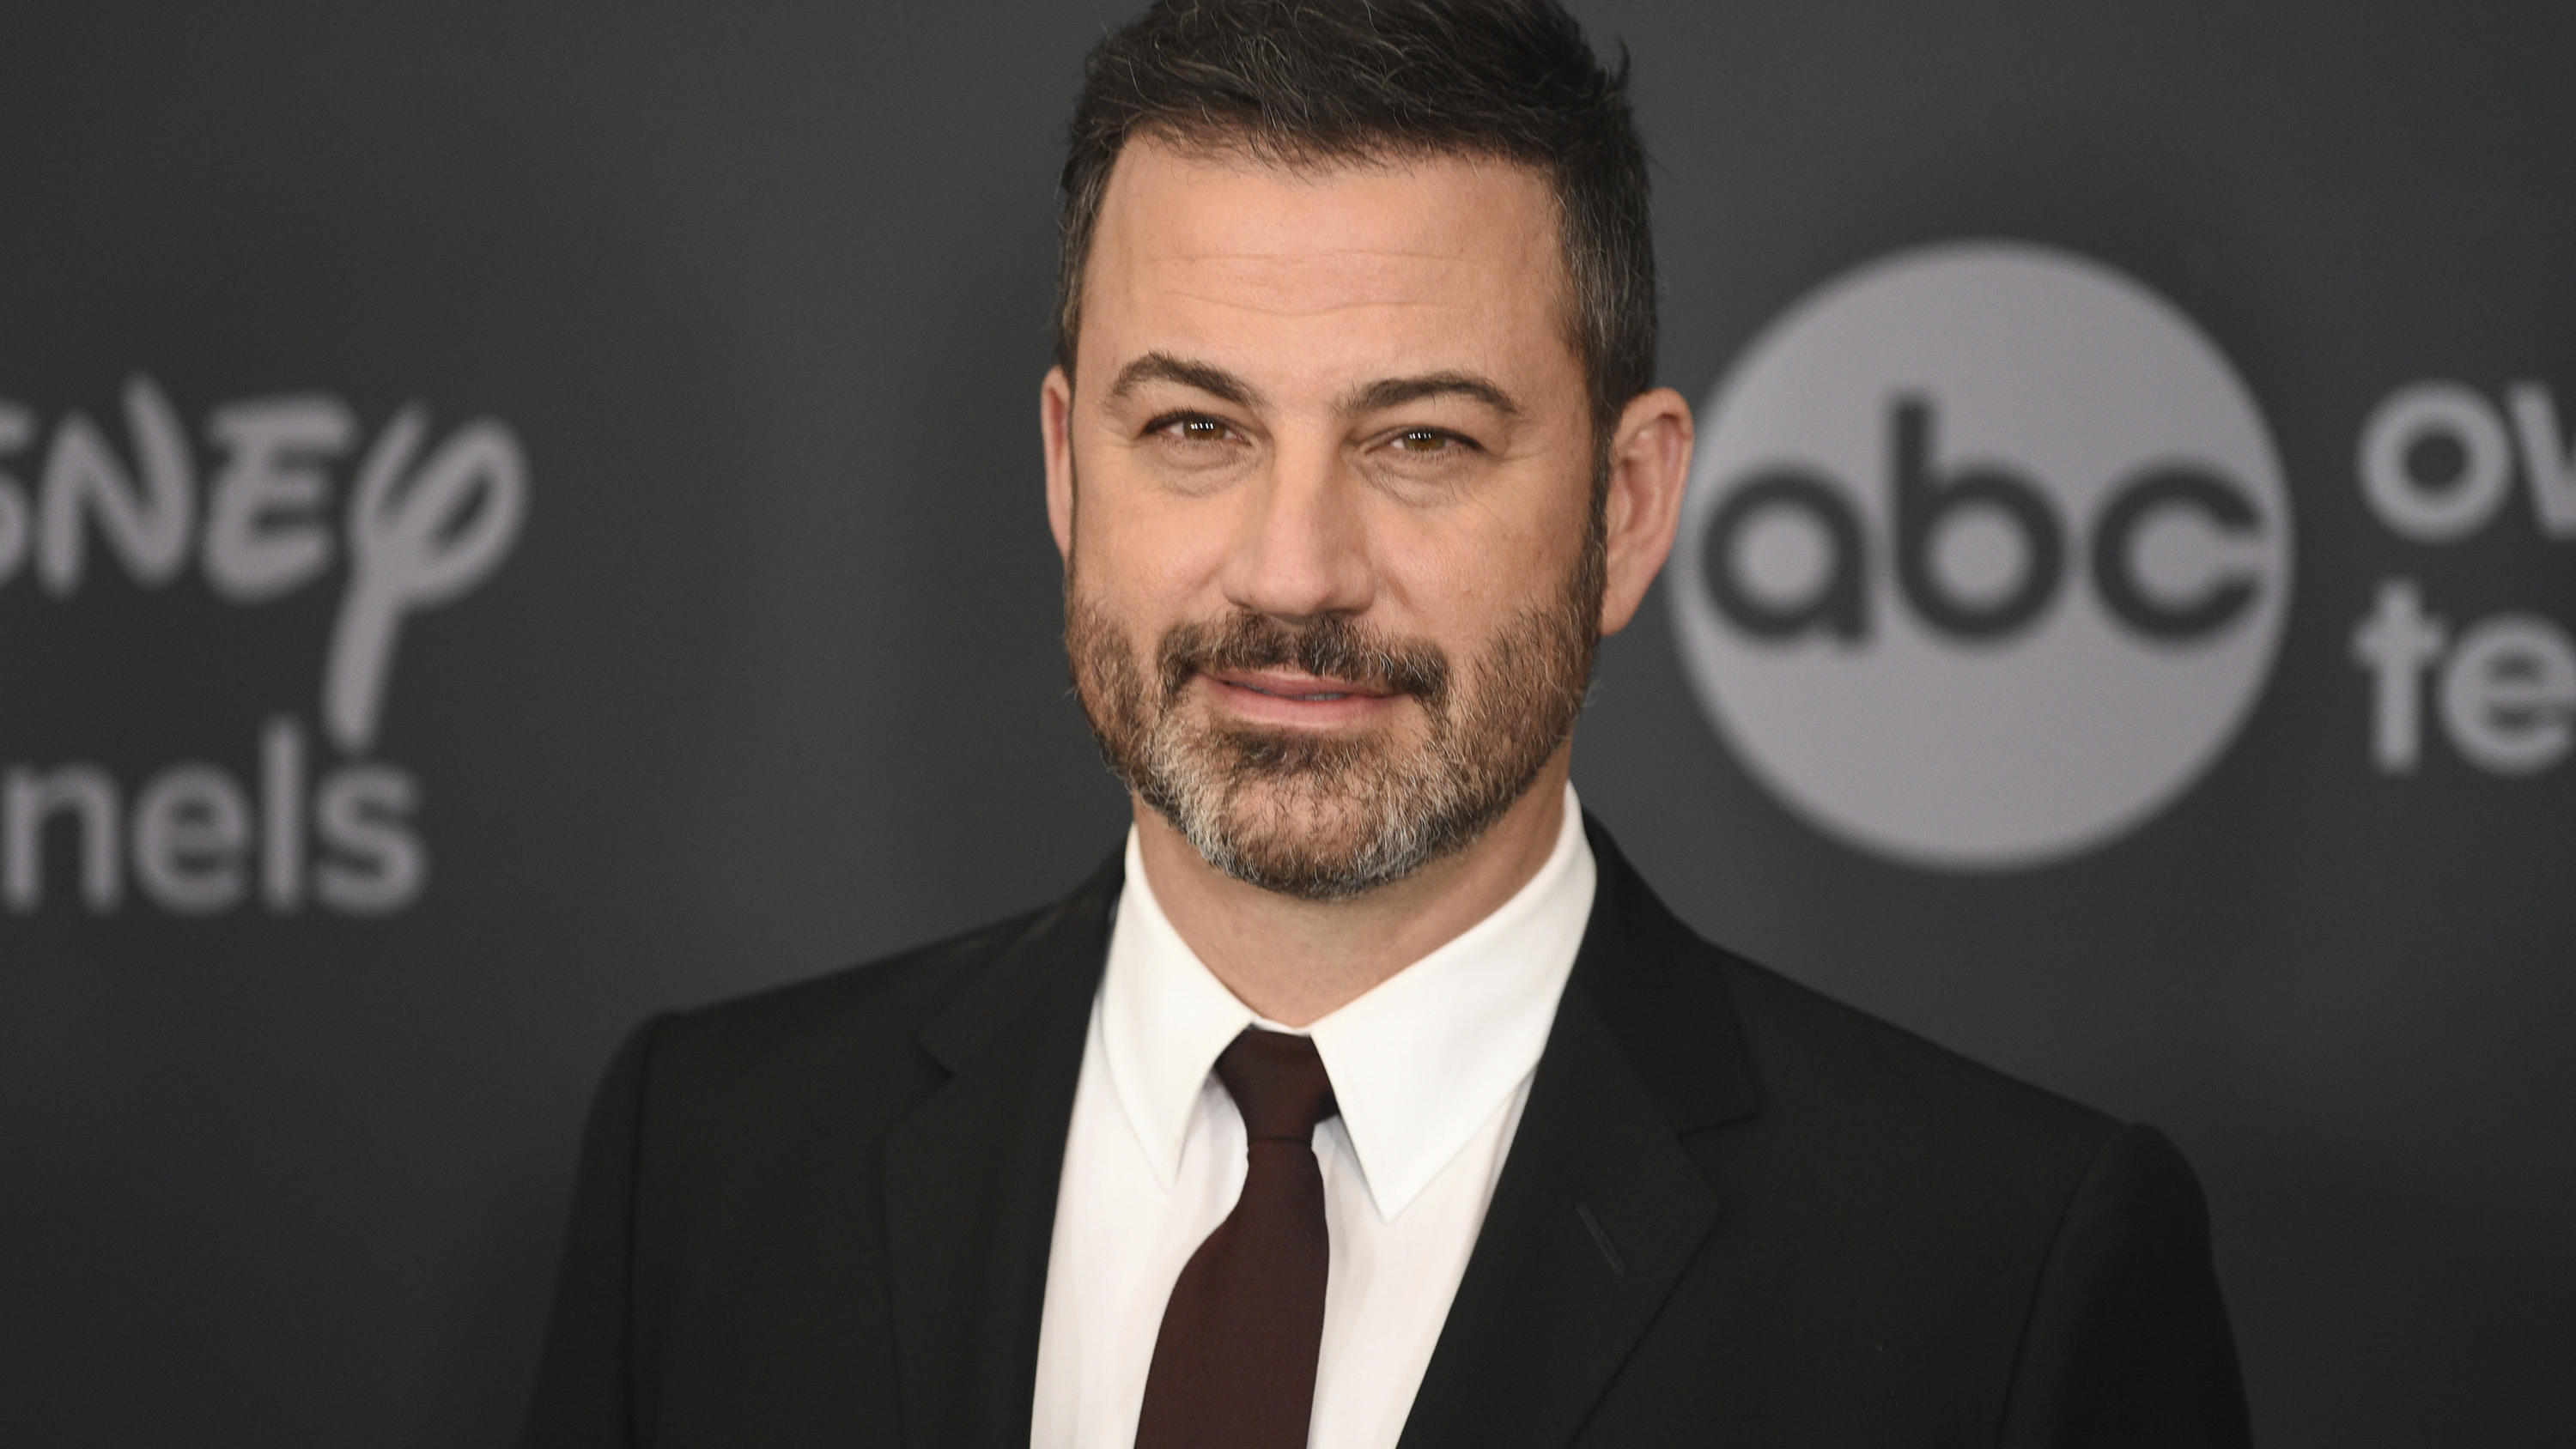 ARCHIV - 15.05.2019, USA, New York: Jimmy Kimmel, US-Talkshow-Moderator. (zu dpa "Jimmy Kimmel verbrennt sich beim Truthahn-Braten die Haare") Foto: Evan Agostini/Invision/AP/dpa +++ dpa-Bildfunk +++